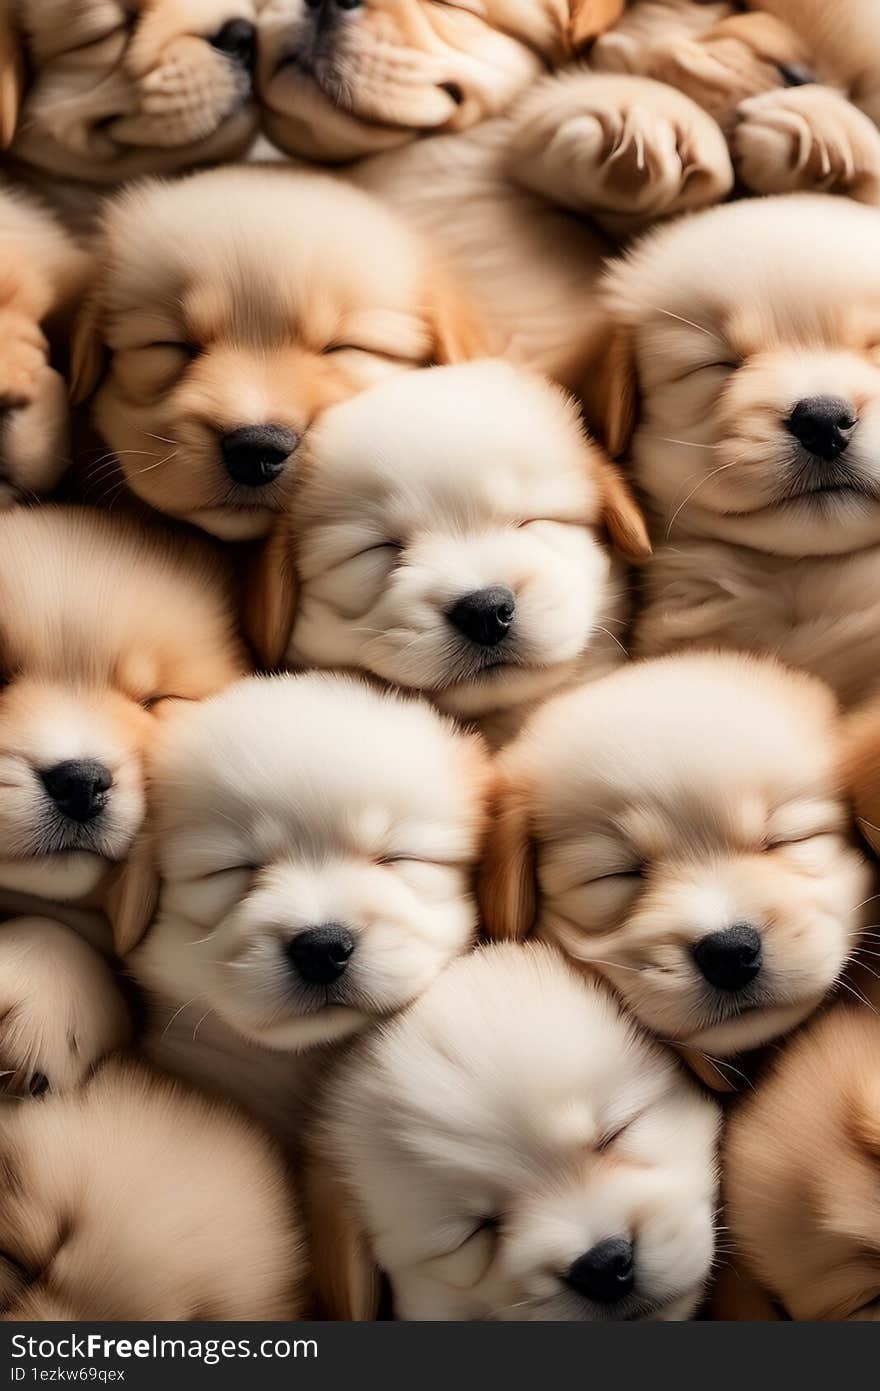 A big cute bunch of adorable puppy faces. A big cute bunch of adorable puppy faces.